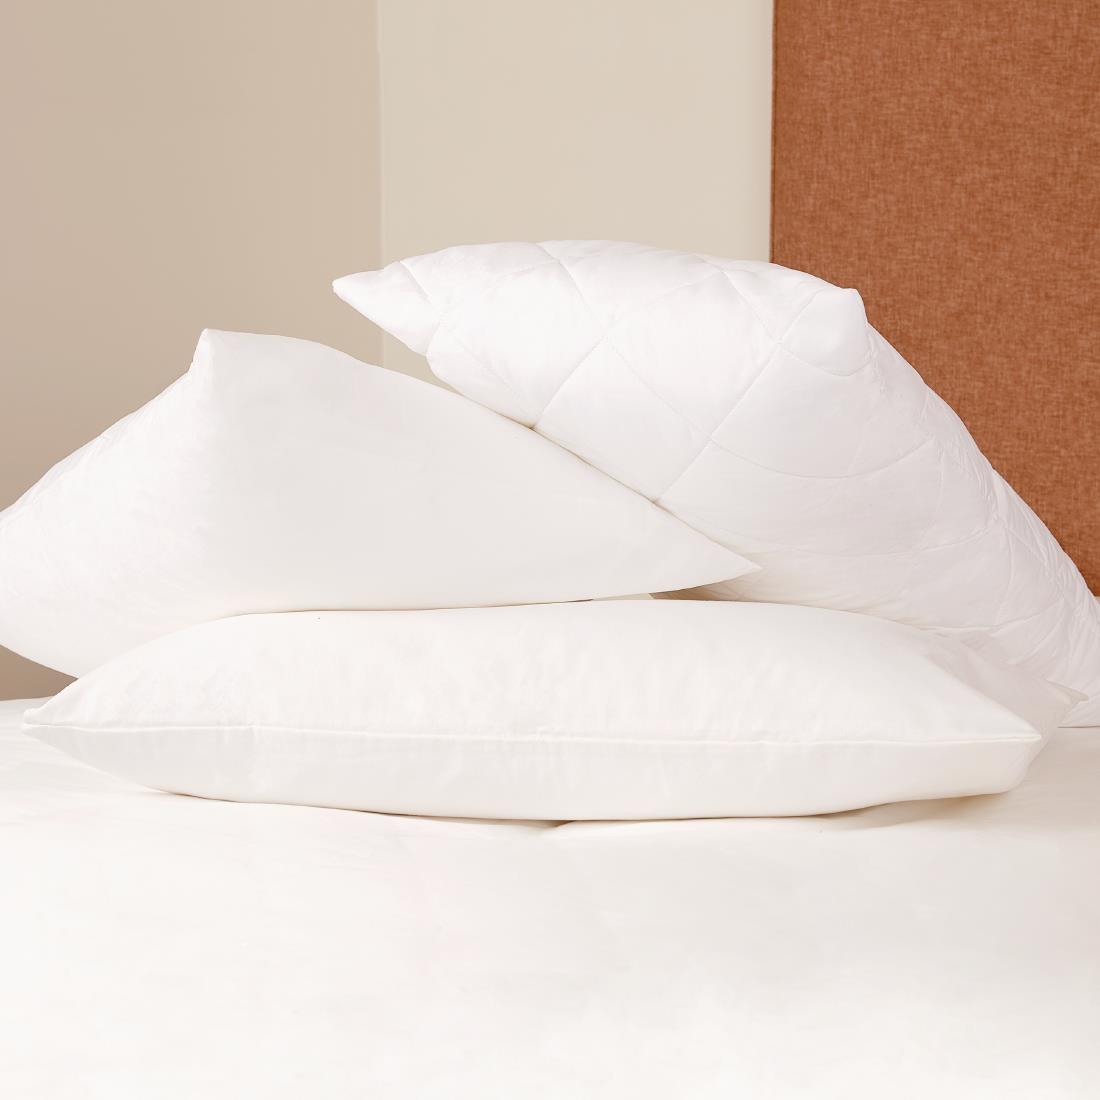 Mitre Comfort Polyzip Pillow Protector - GT799  - 1